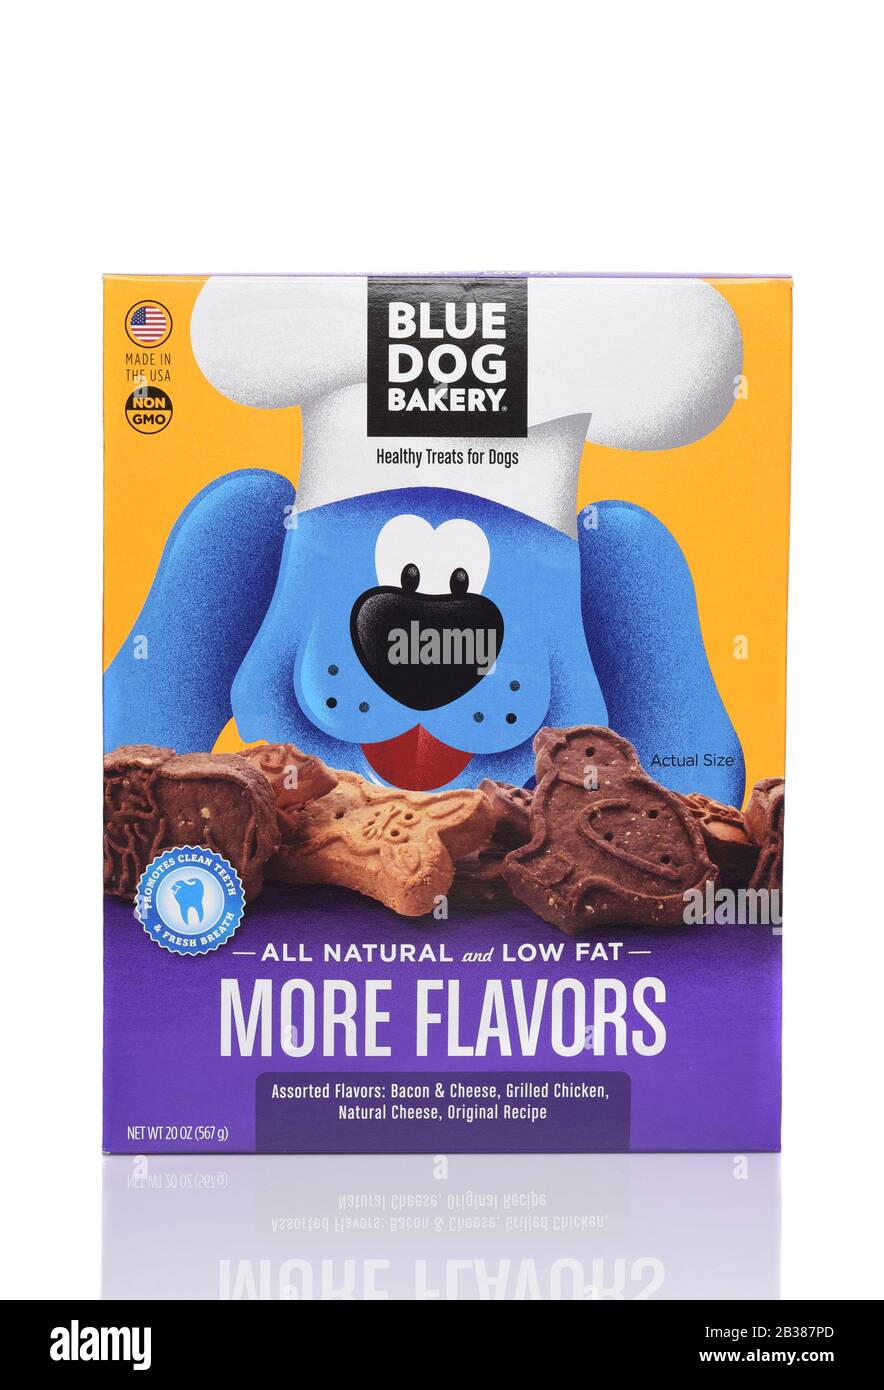 IRVINE, CALIFORNIA - 4 OCT 2019: A box of Blue Dog Bakery More Flavors healthy dog treats. Stock Photo